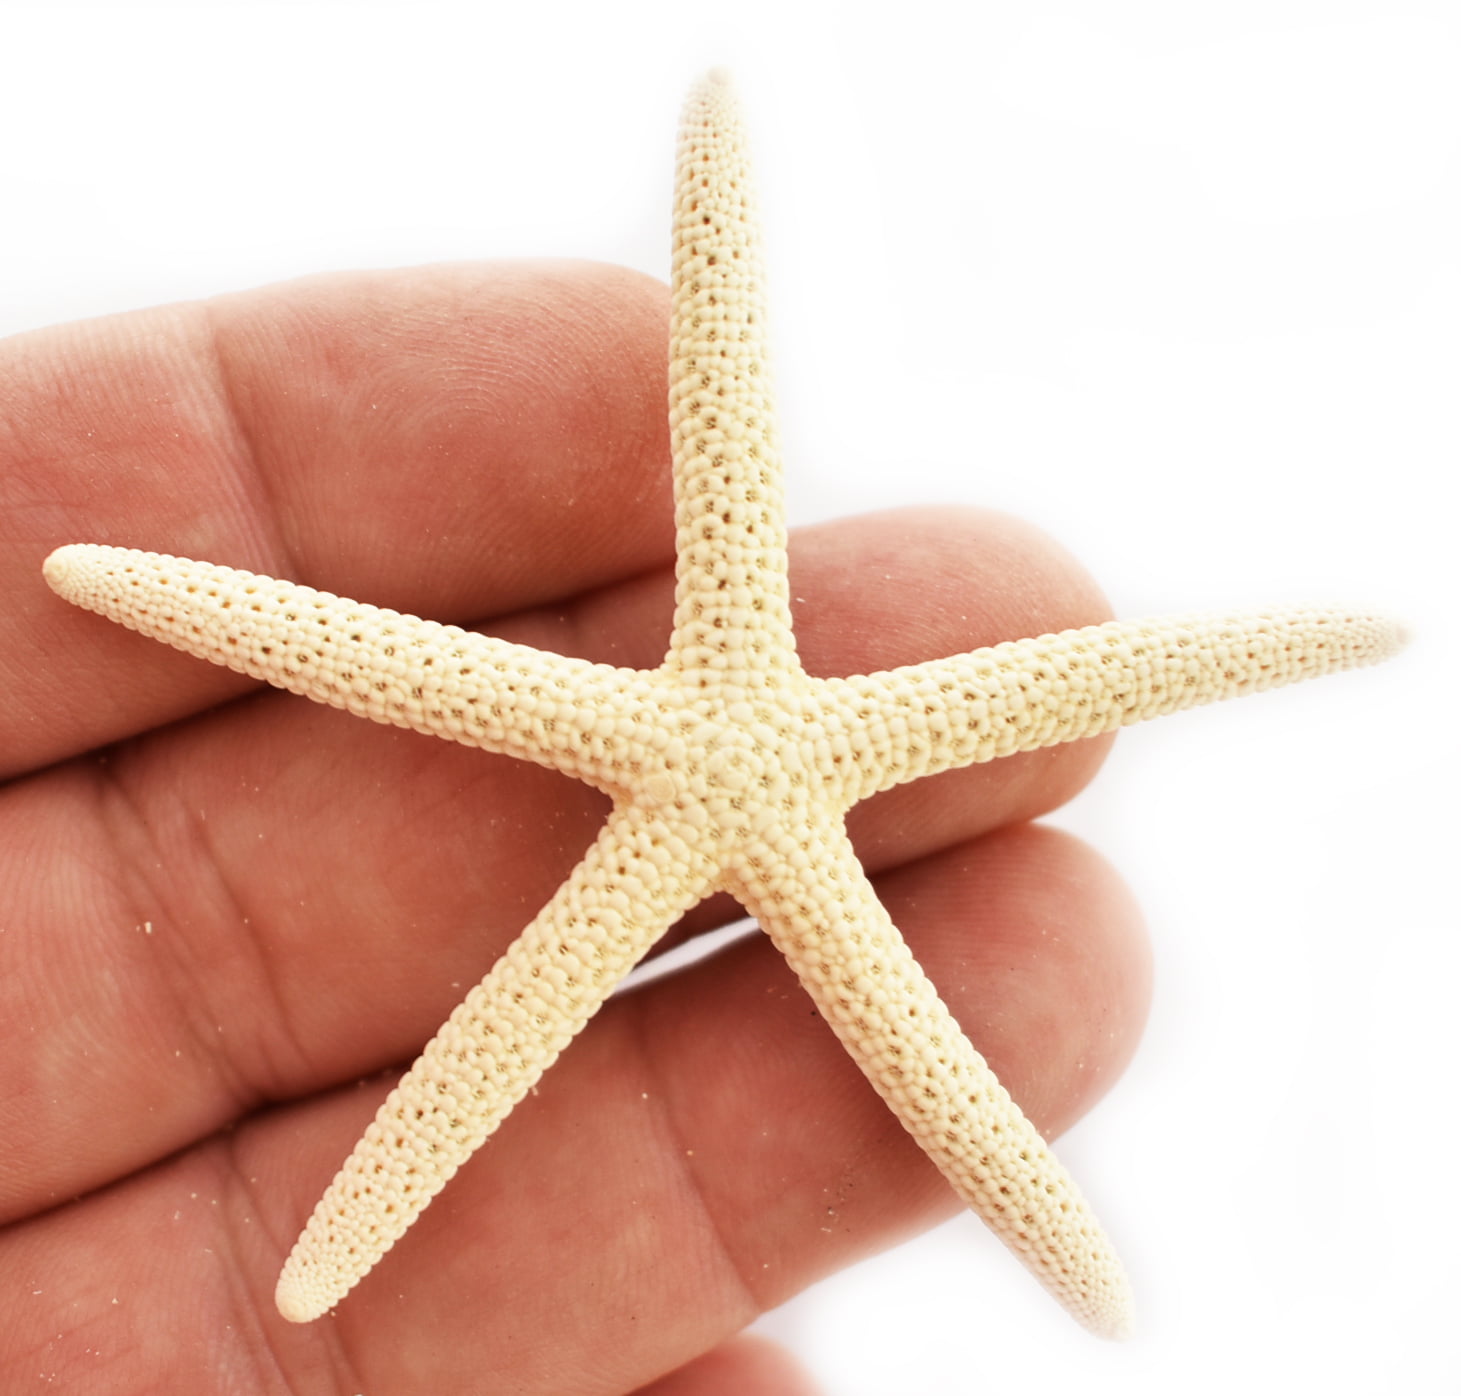 Starfish and Sand Dollars 8 pcs Sea Life Sampler: Sea Urchin Beach Decor Art